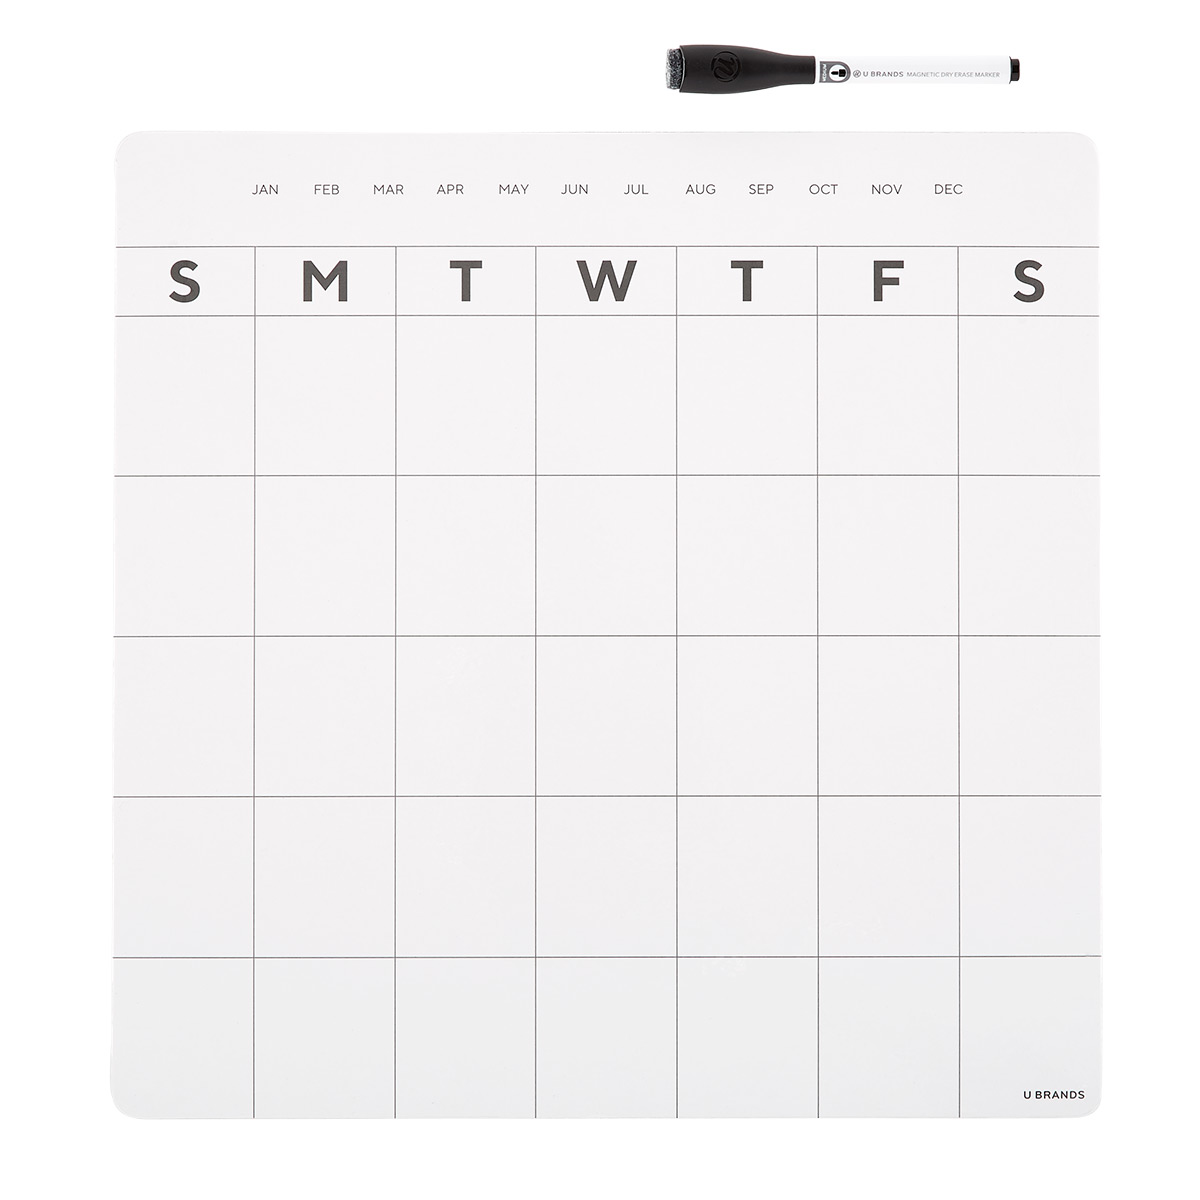 Details about   Dry Erase Calendar Kit Magnetic Calendar For Refrigerator Monthly Fridge Cale 